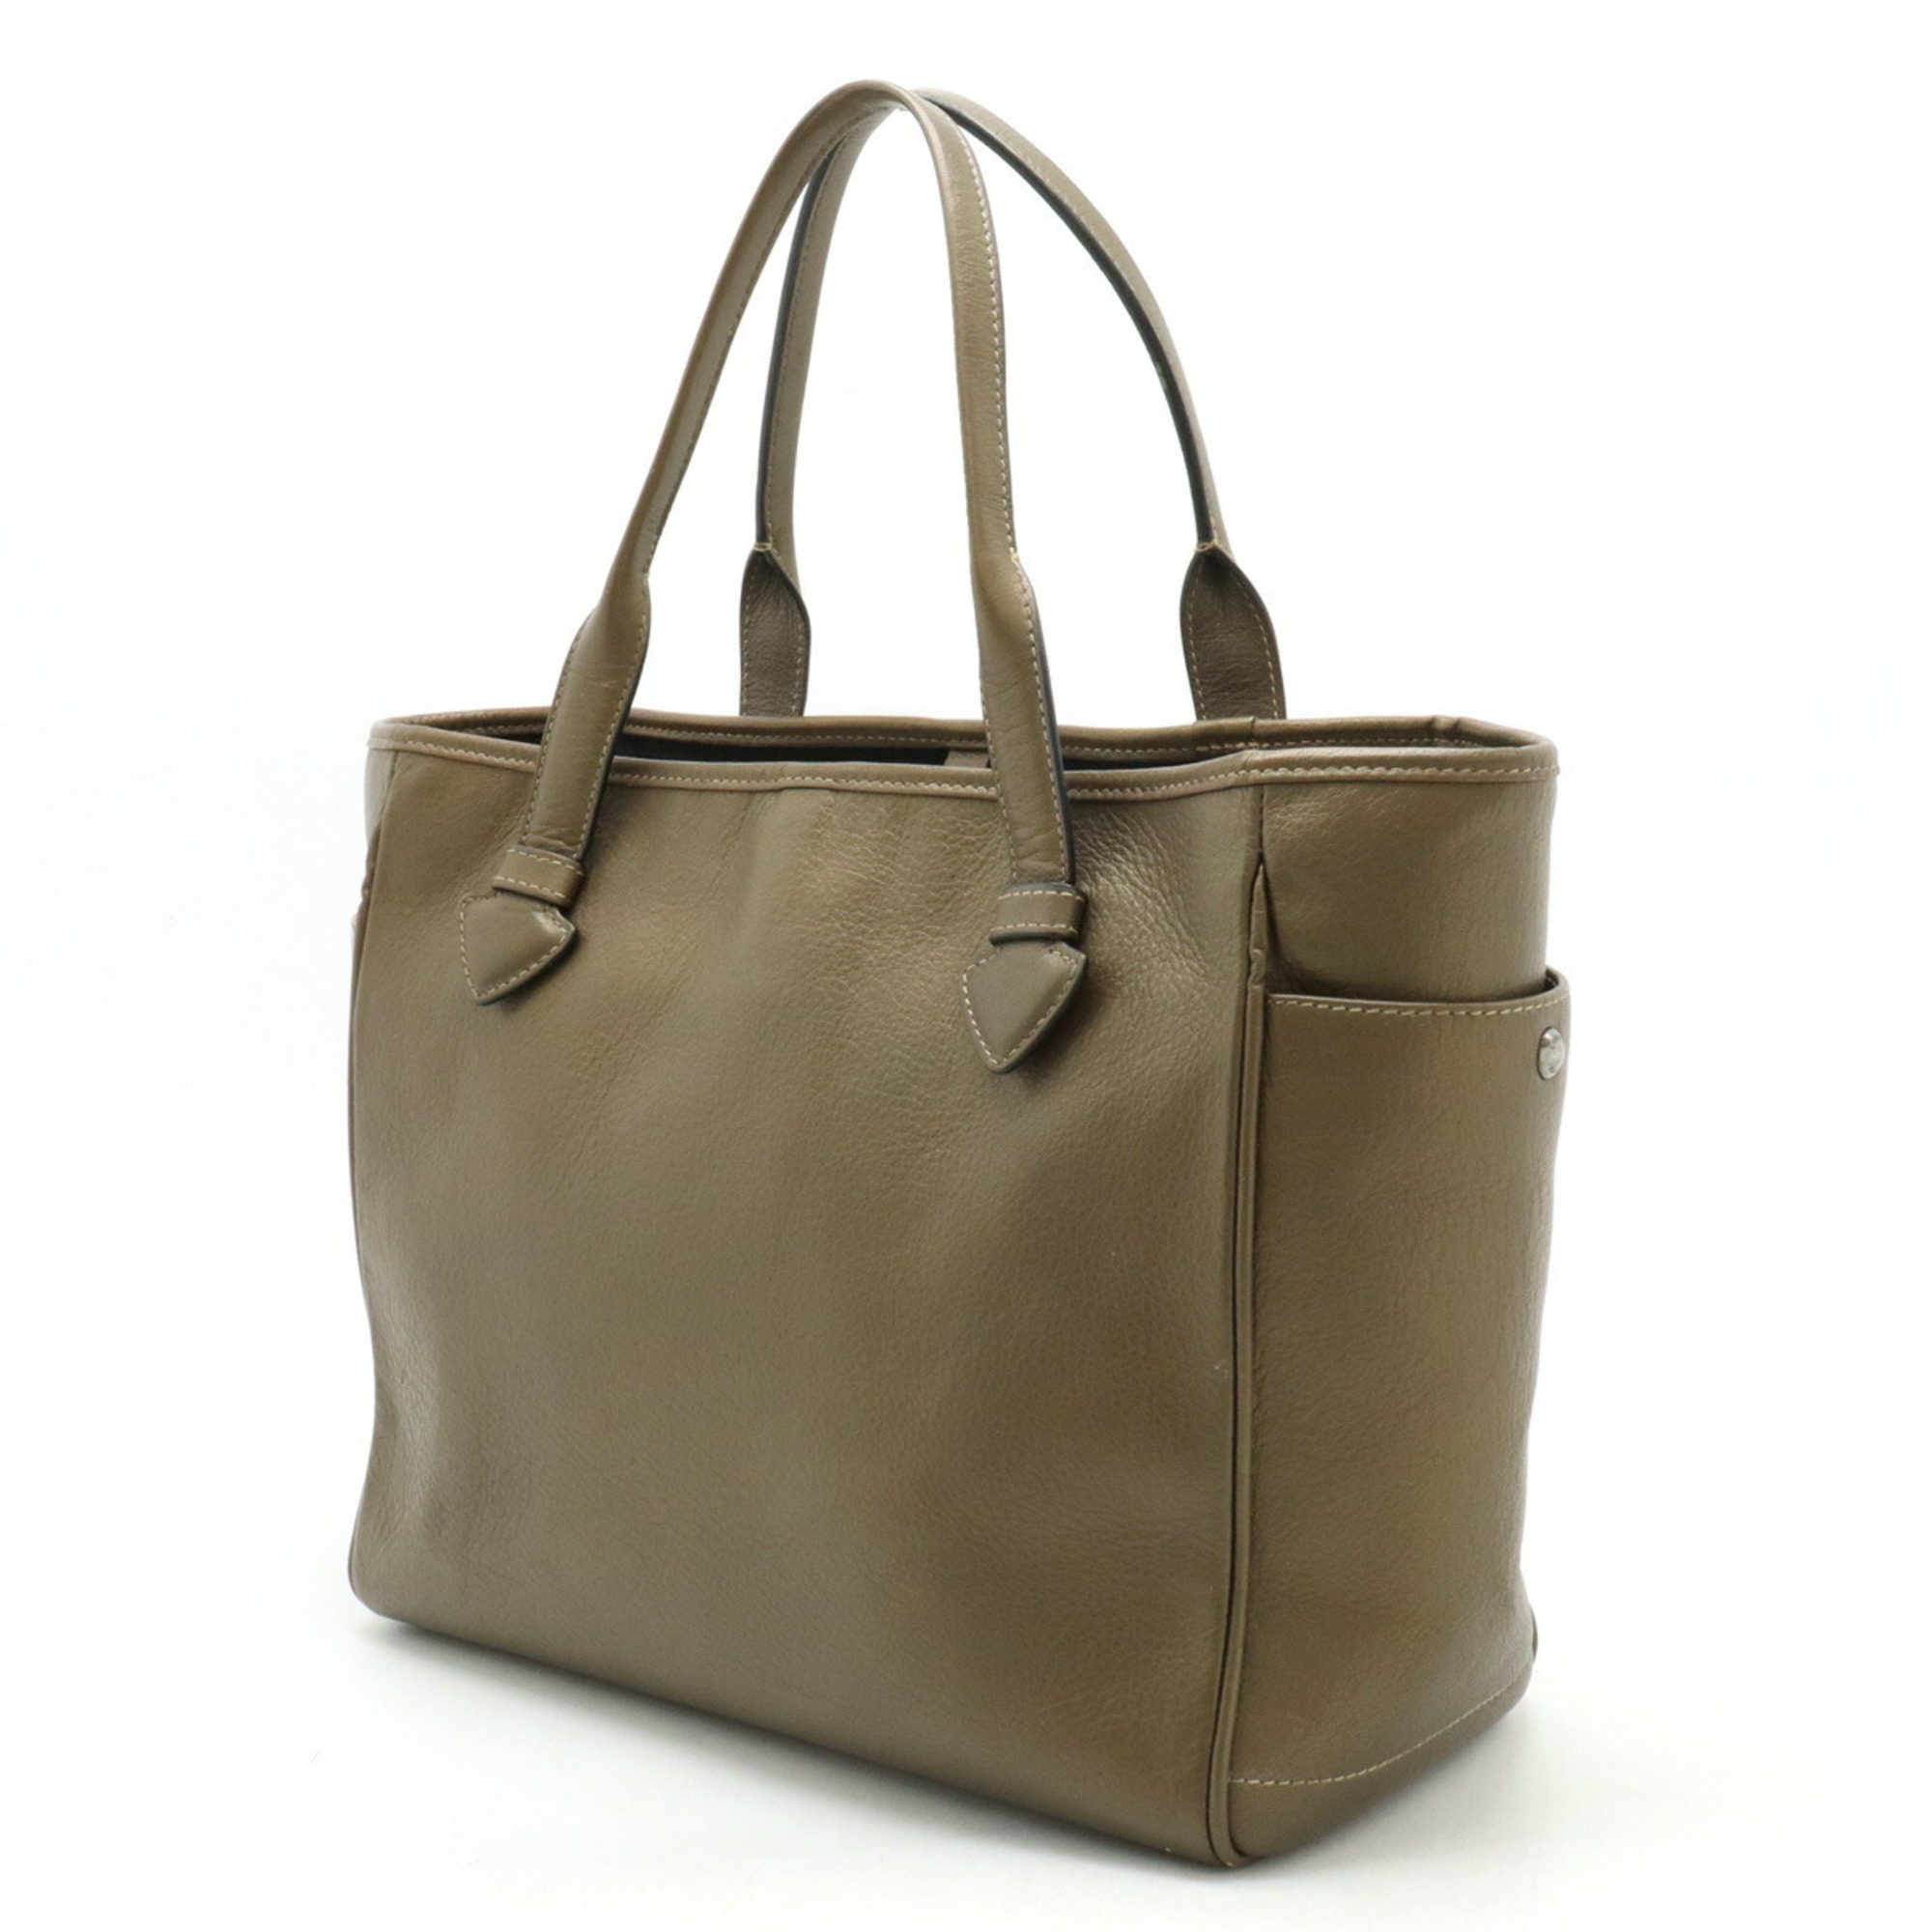 LOEWE Heritage Small Tote Bag Handbag Leather Bronze Khaki 377.79.751